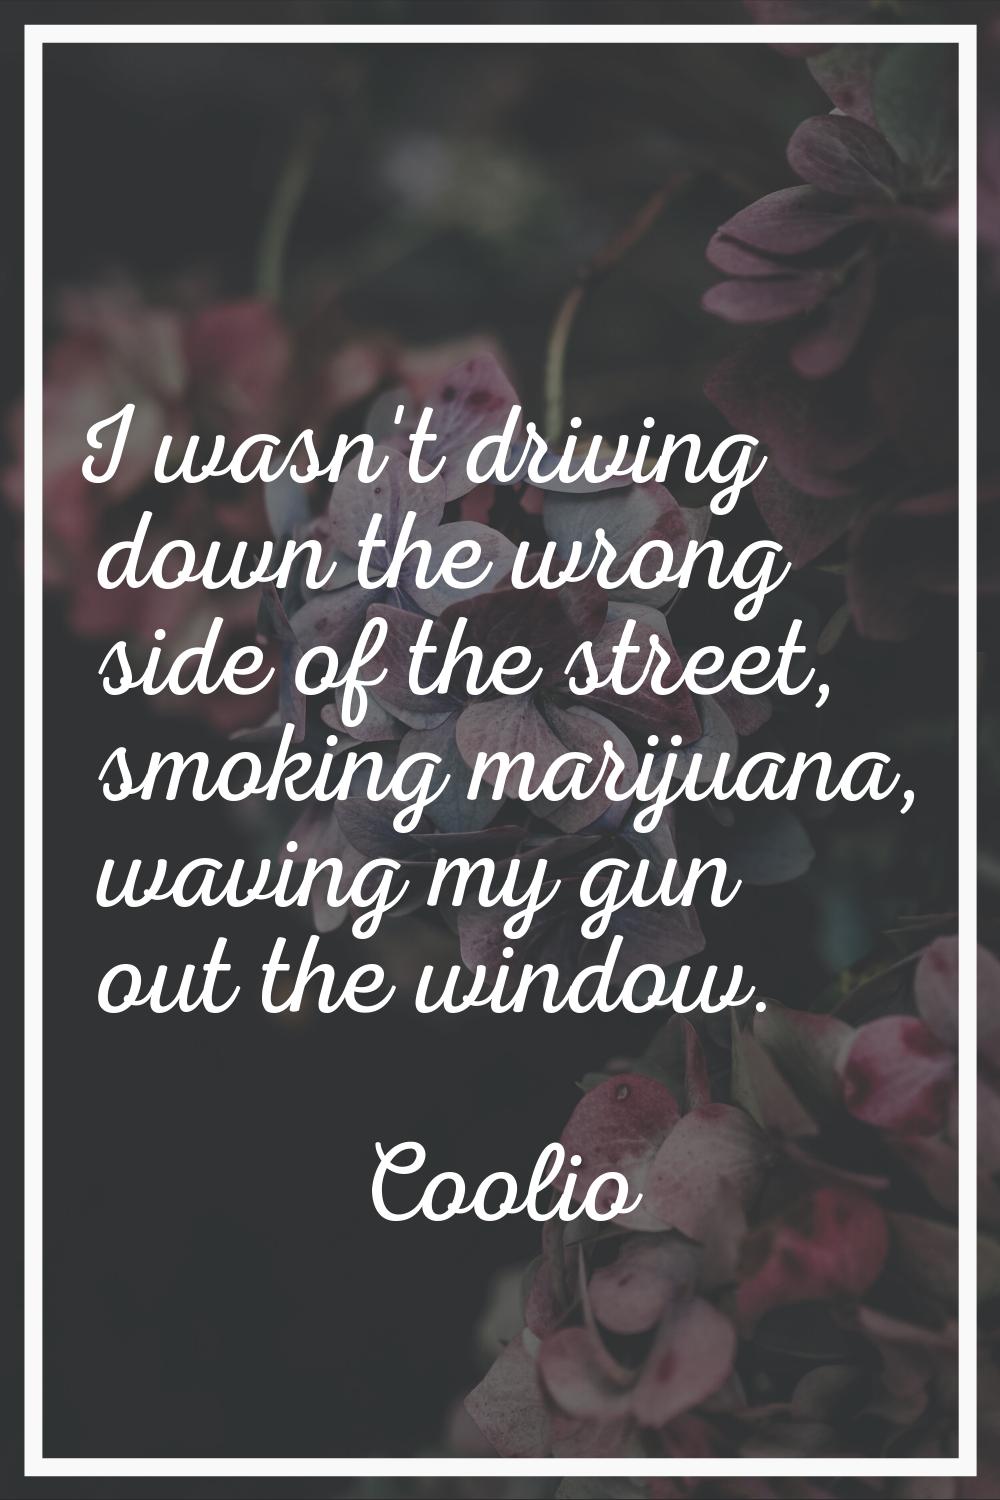 I wasn't driving down the wrong side of the street, smoking marijuana, waving my gun out the window